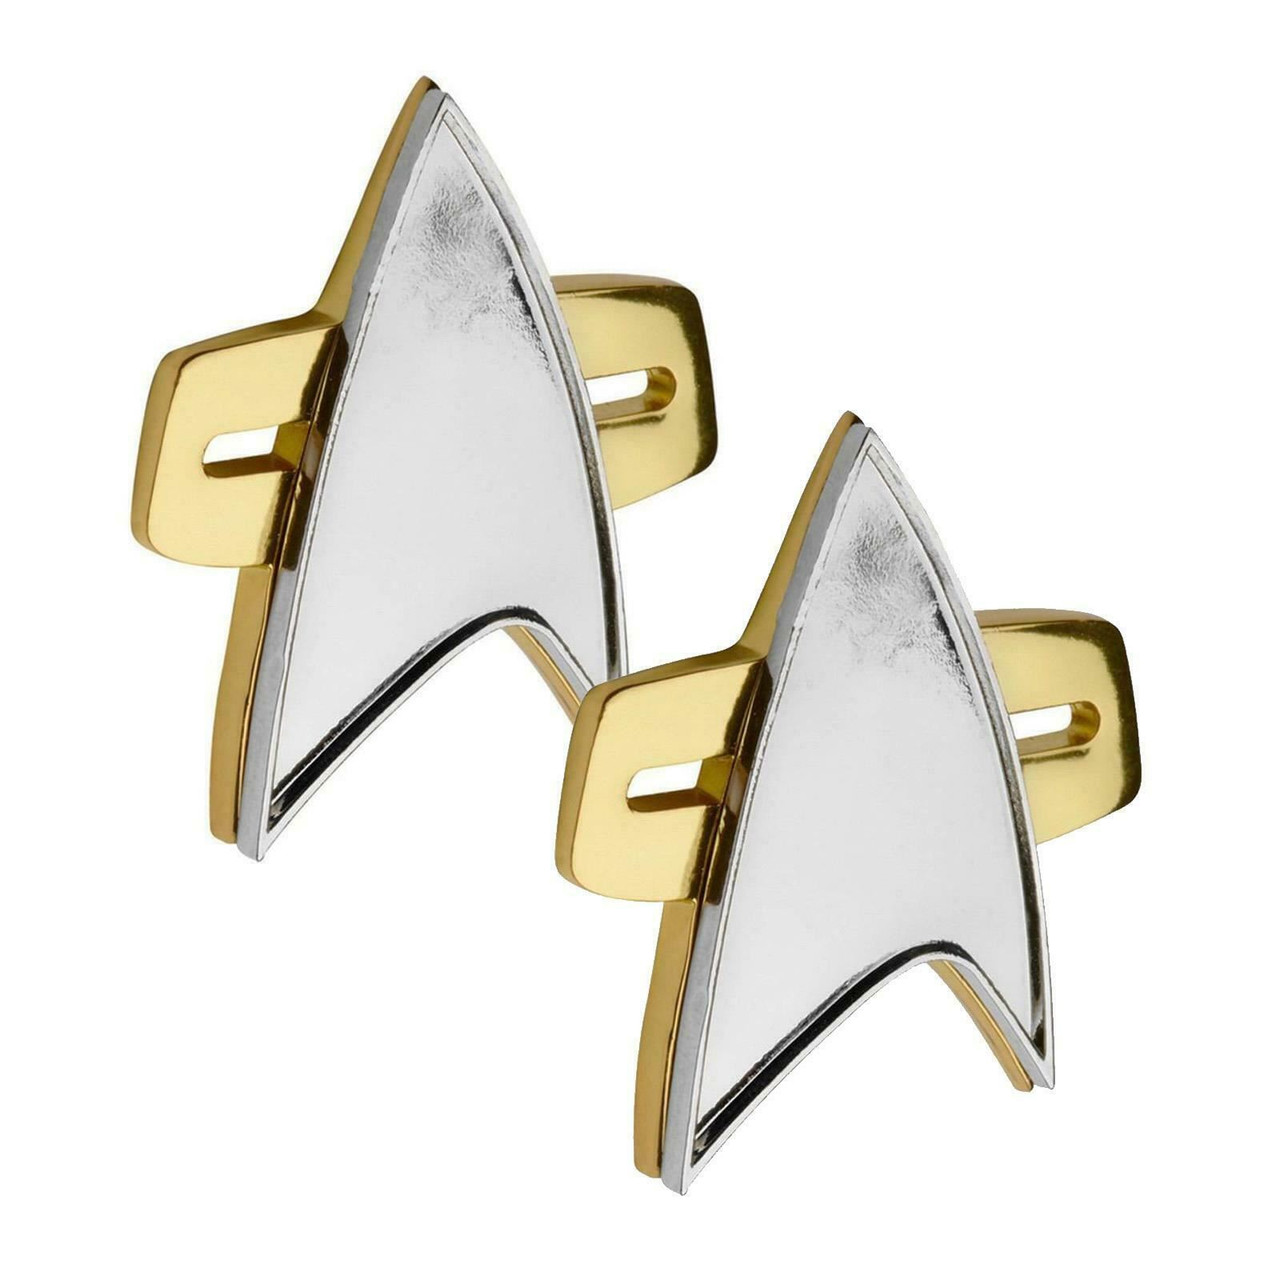 Star Trek Voyager Communication Badge Replica - 1